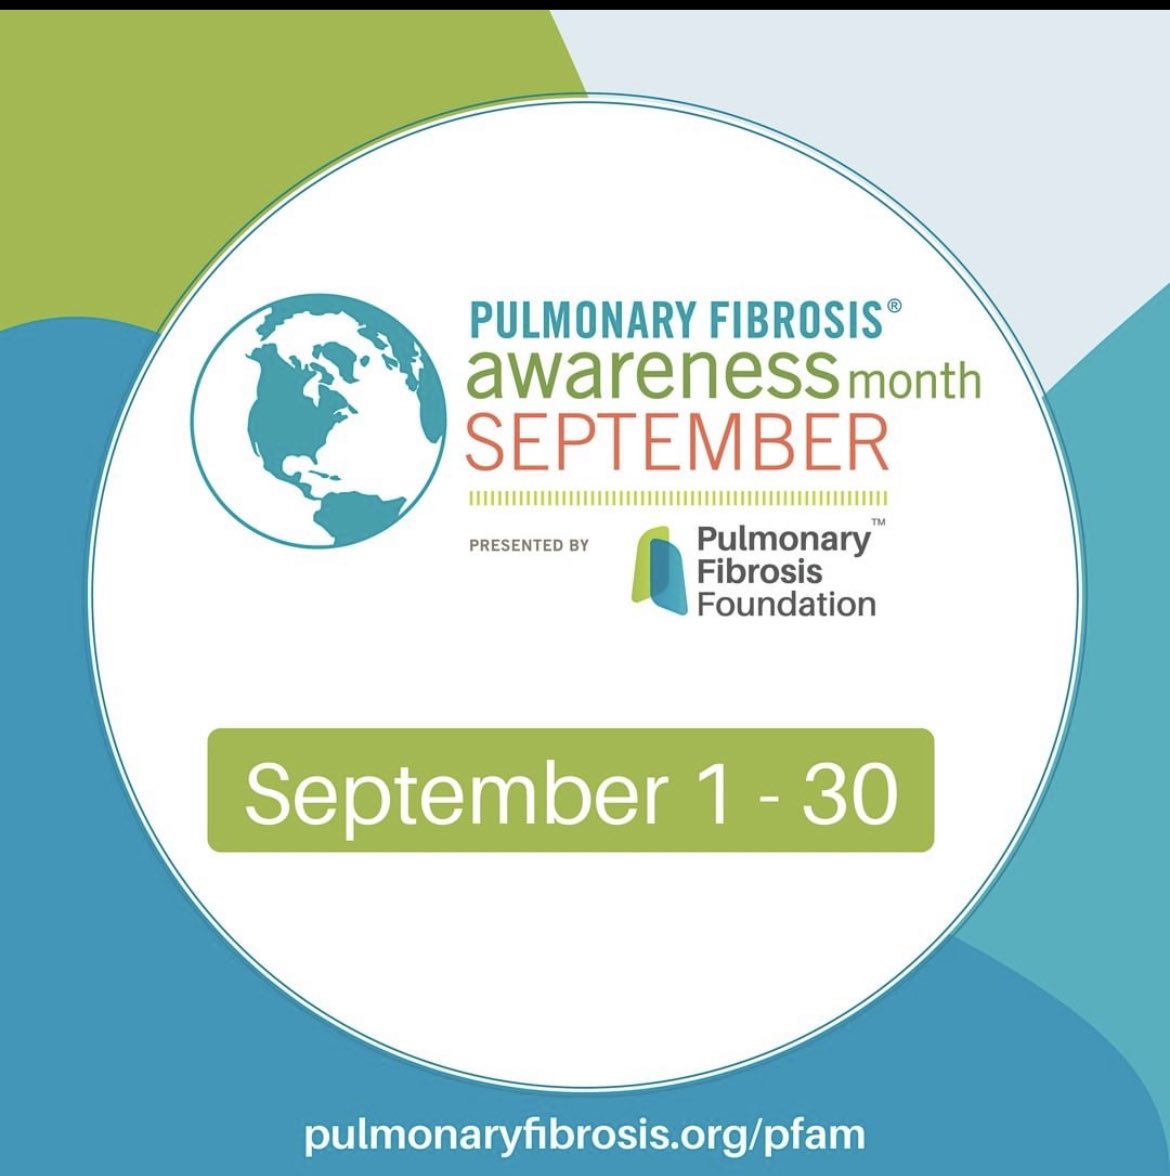 Pulmonary fibrosis awareness month starts today 💚💙